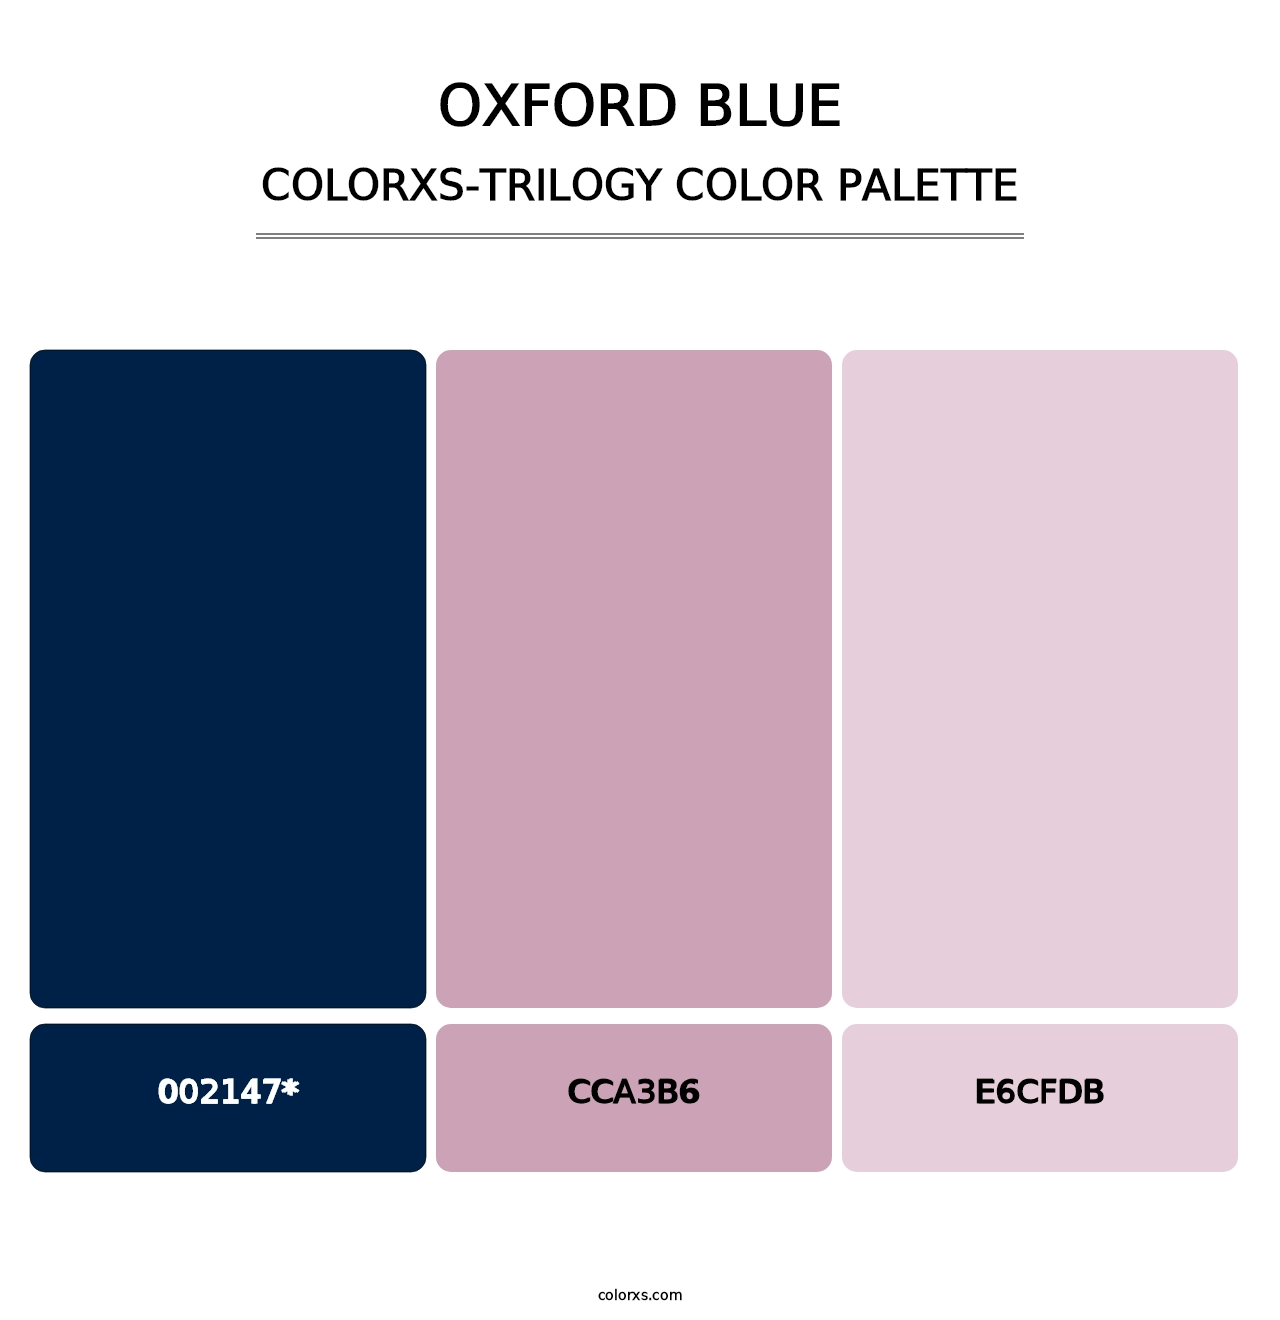 Oxford Blue - Colorxs Trilogy Palette